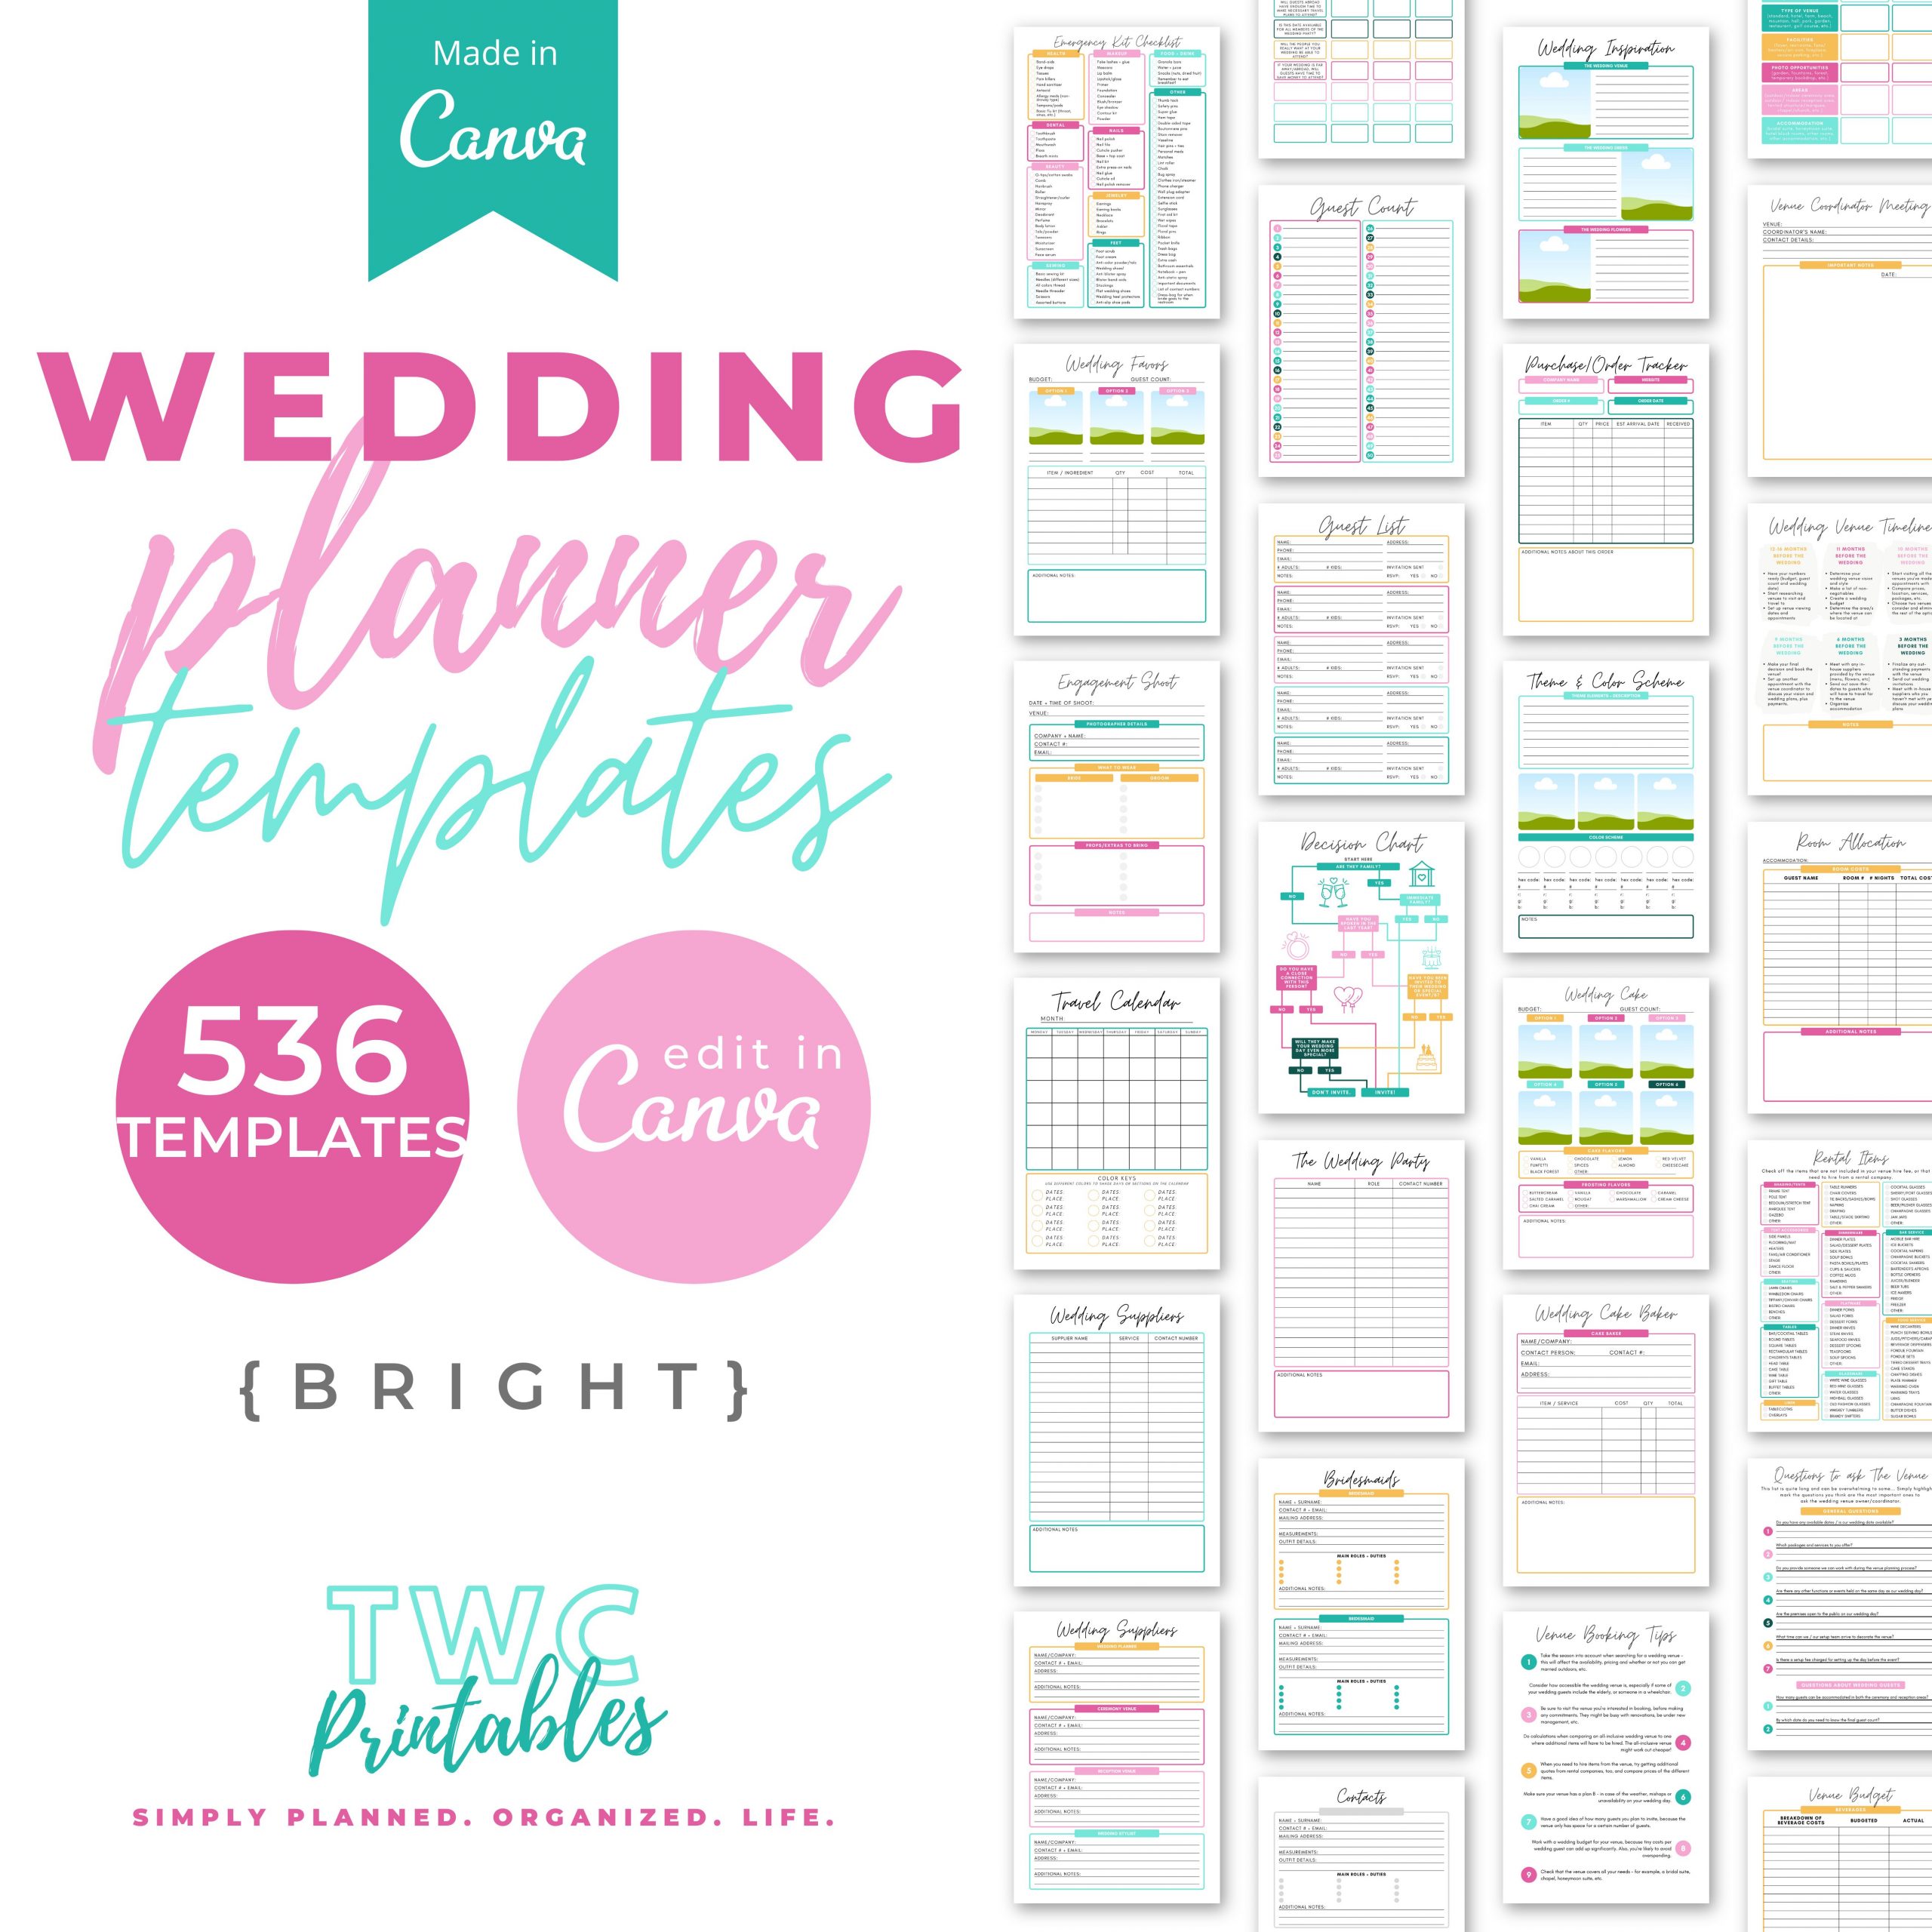 Editable Wedding Planner Templates for Canva - TWCprintables